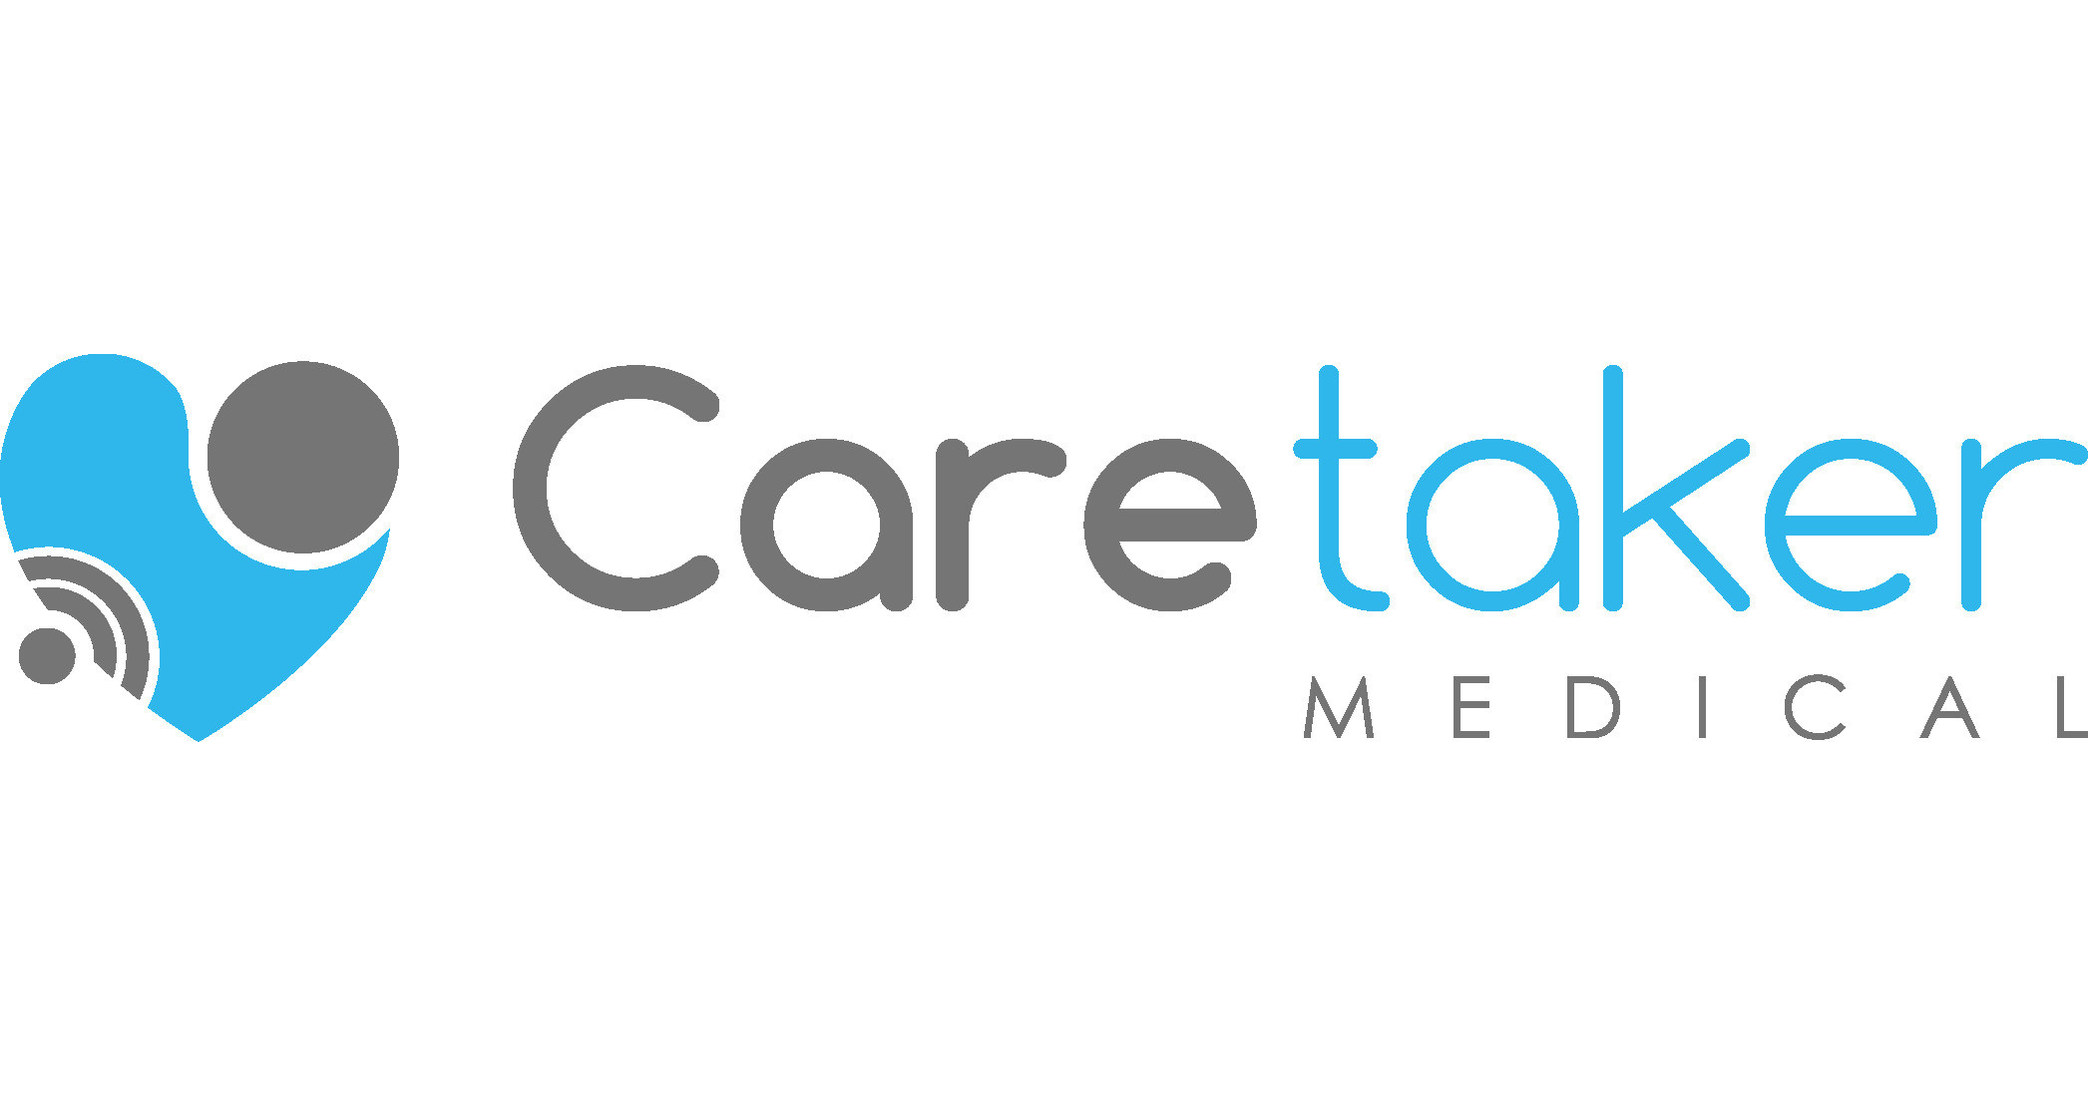 https://mma.prnewswire.com/media/894752/Caretaker_Medical_Logo.jpg?p=facebook